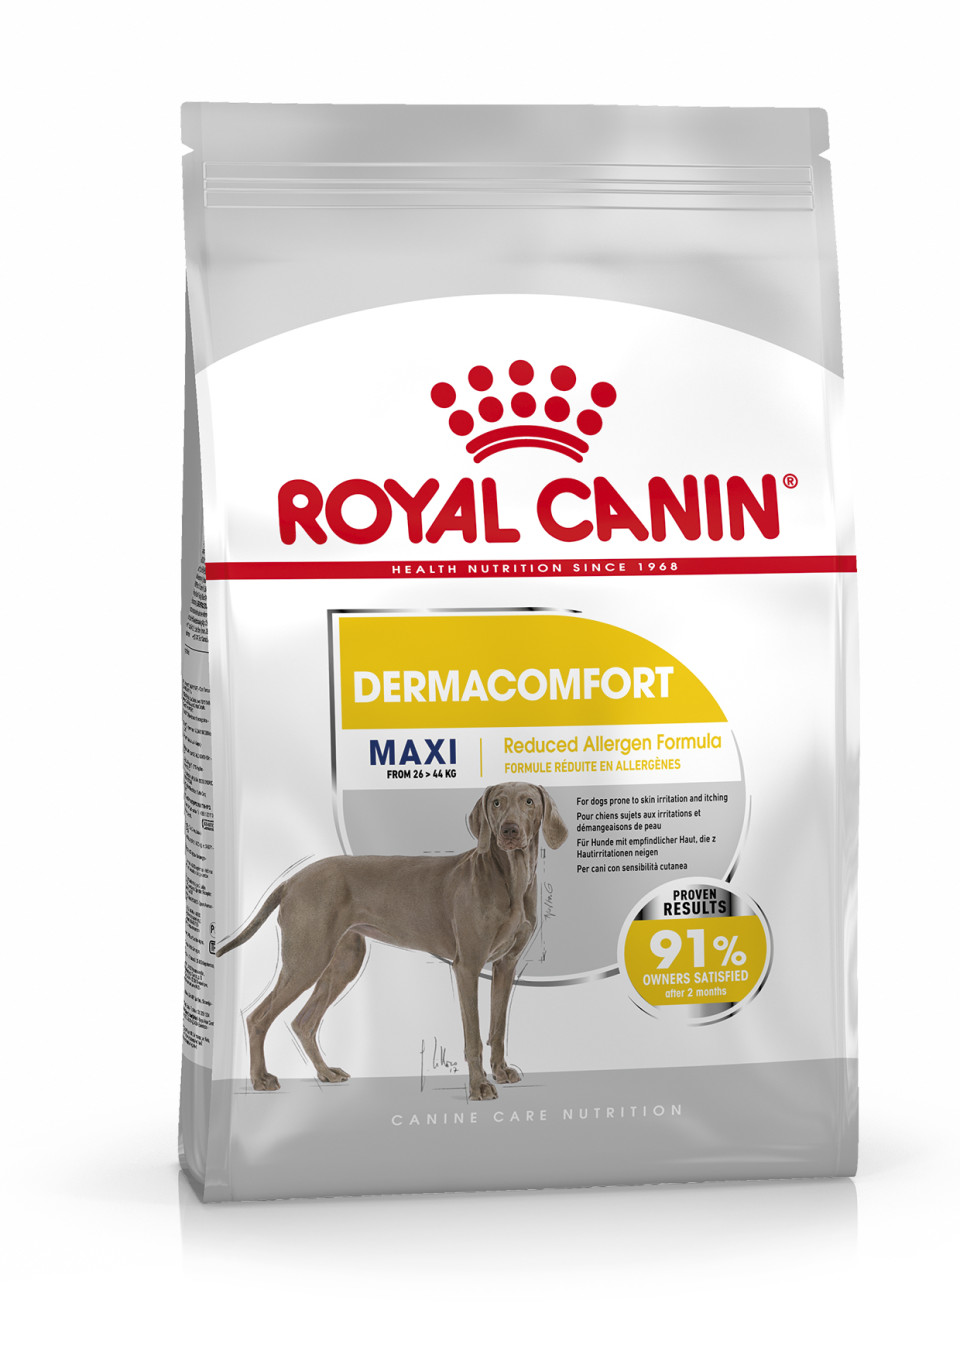 Dermacomfort Care - Royal Canin - Royal Canin